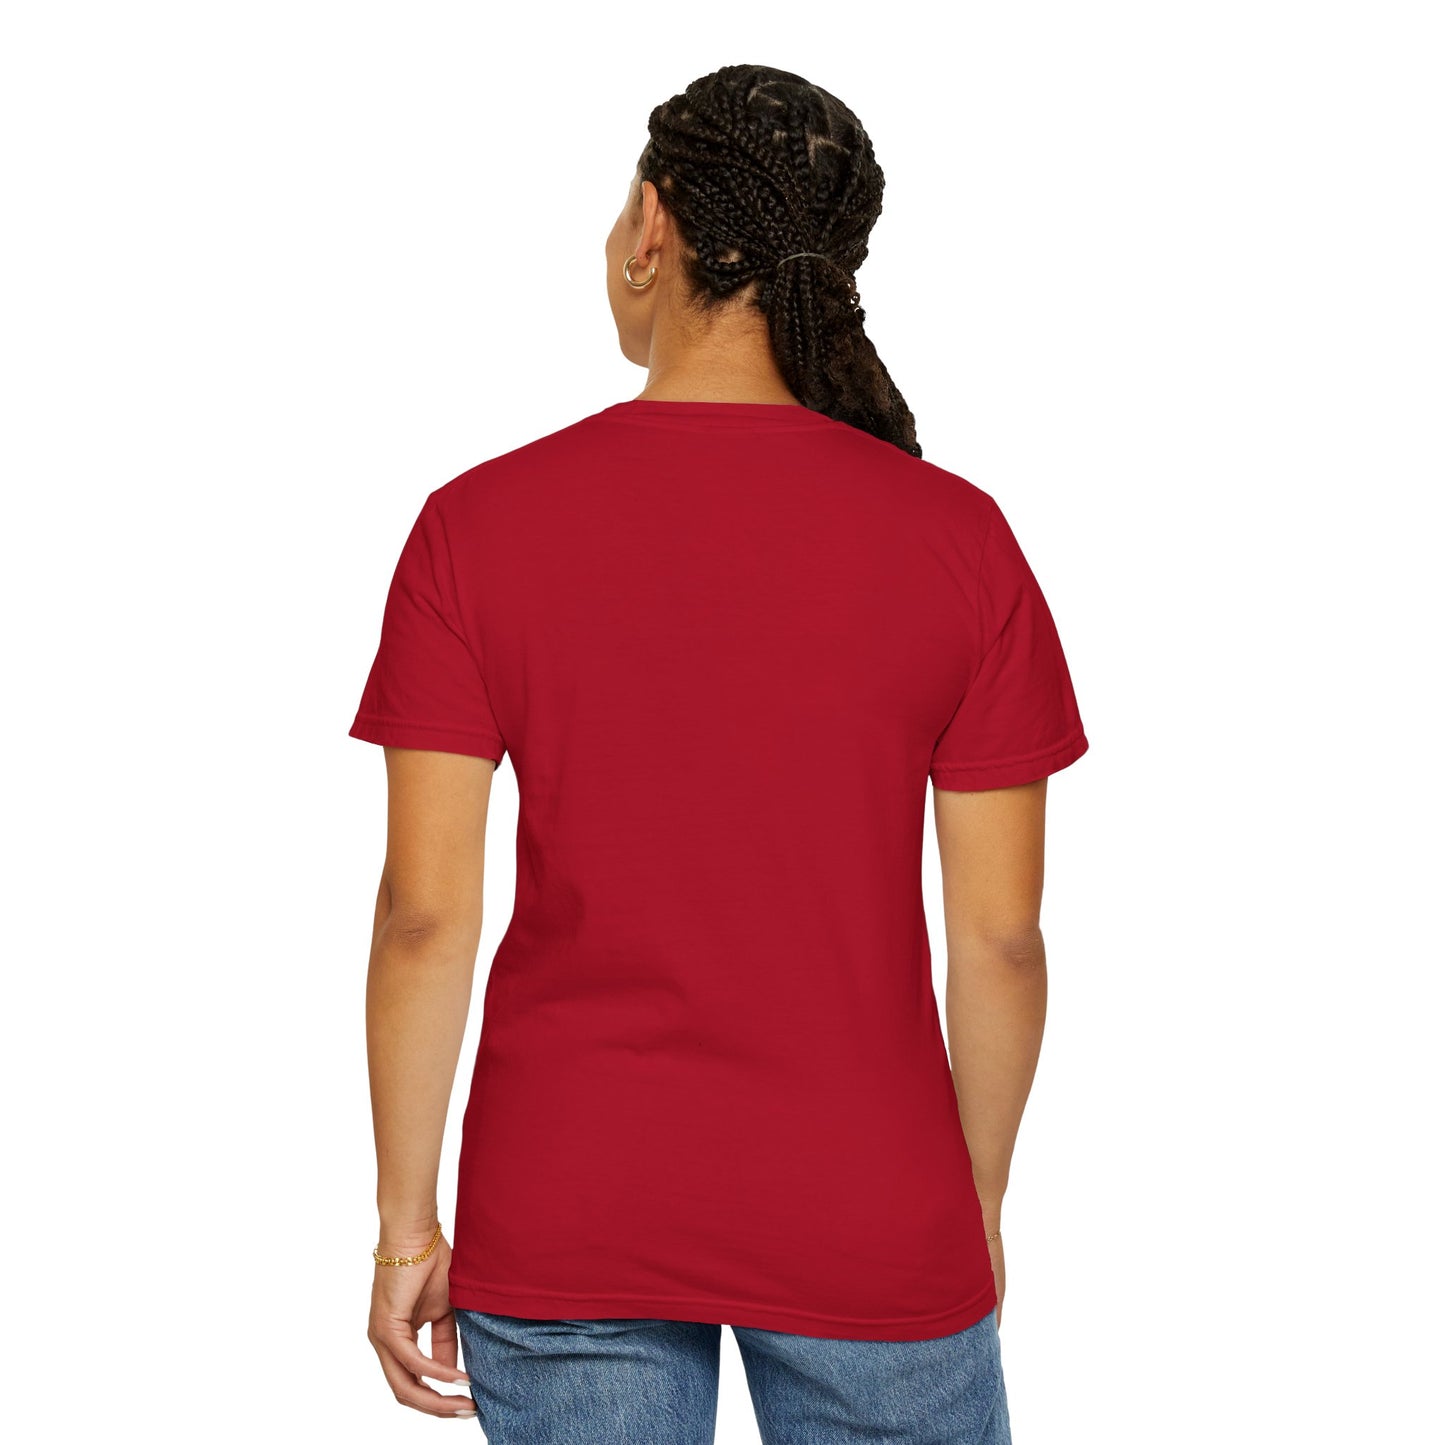 Hey trainwreck - Unisex Garment-Dyed T-shirt